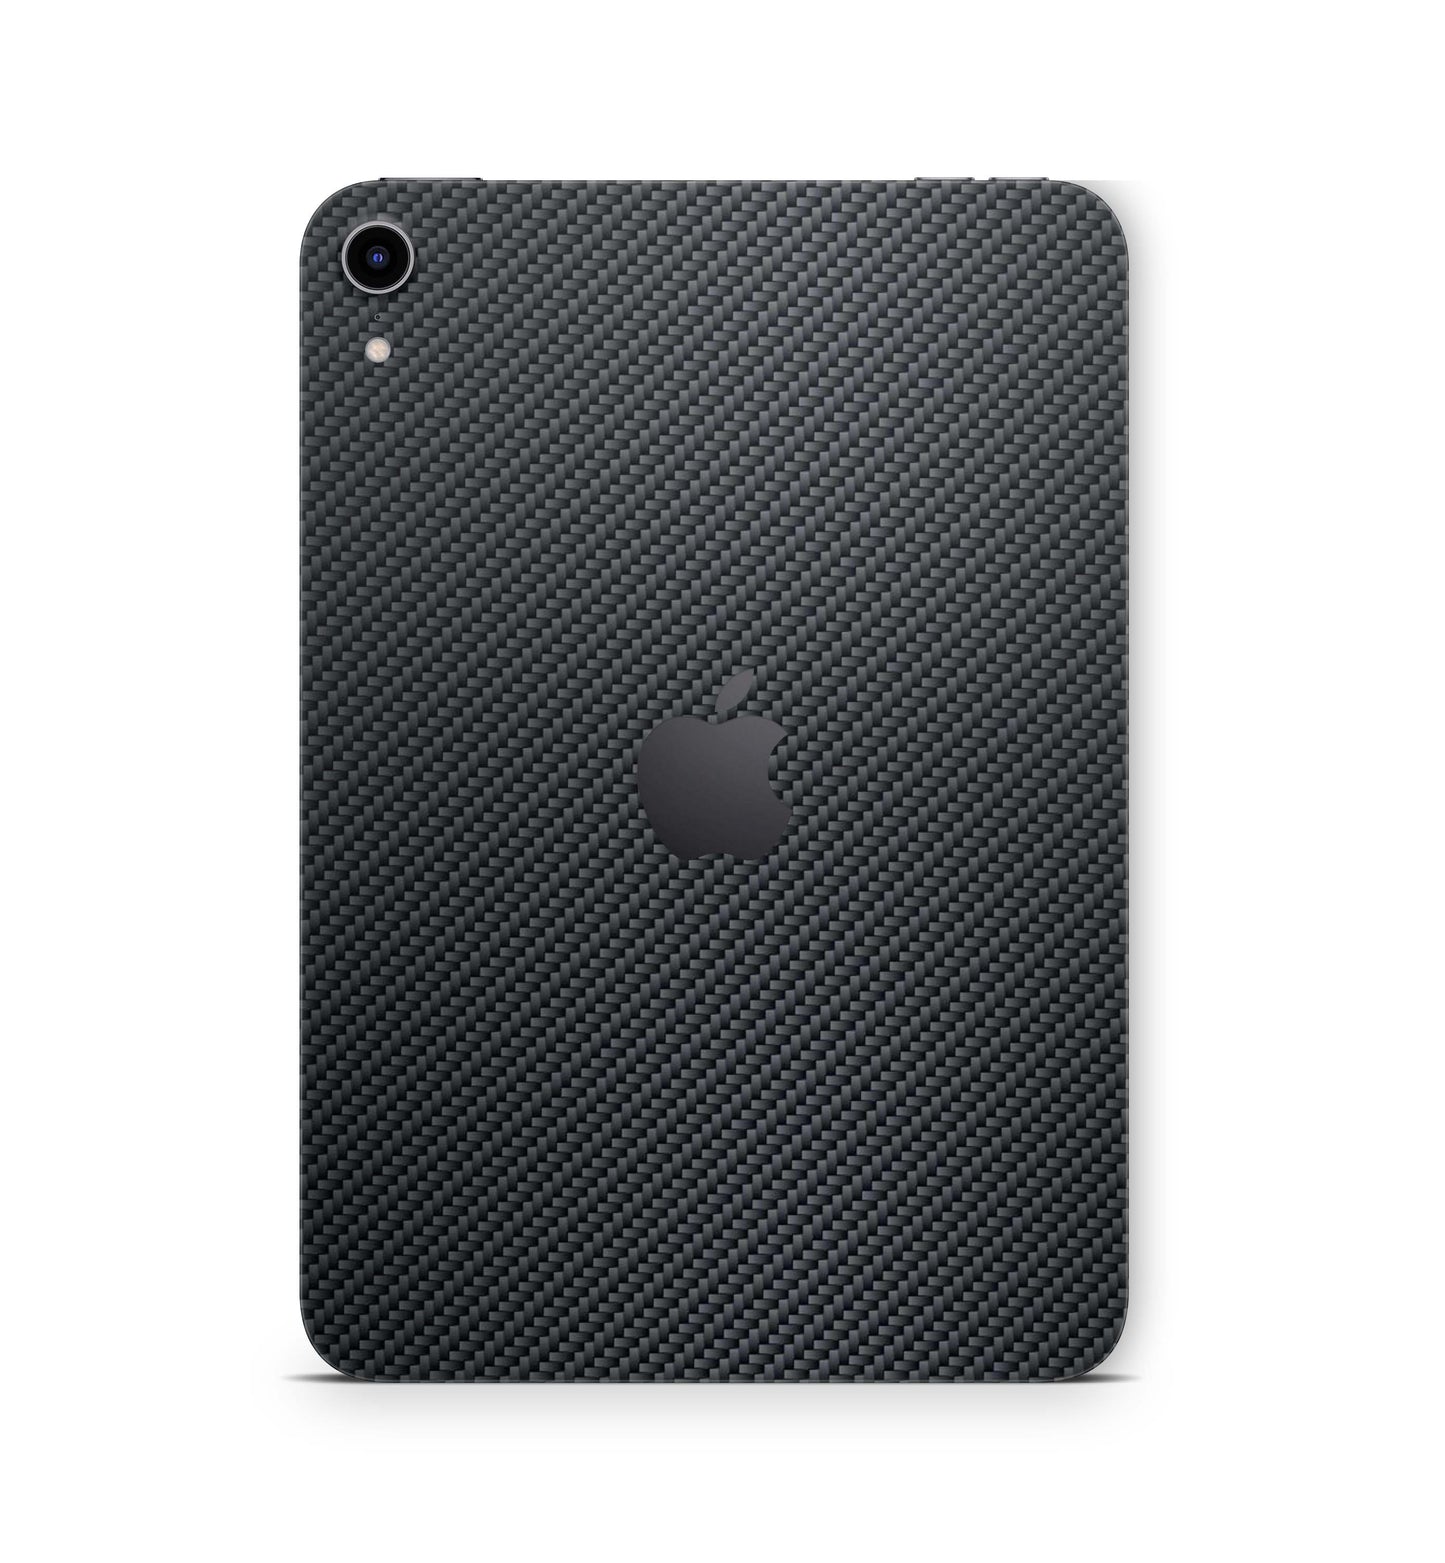 iPad Air Skin Design Cover Folie Vinyl Skins & Wraps für alle iPad Air Modelle Aufkleber Skins4u Carbon  